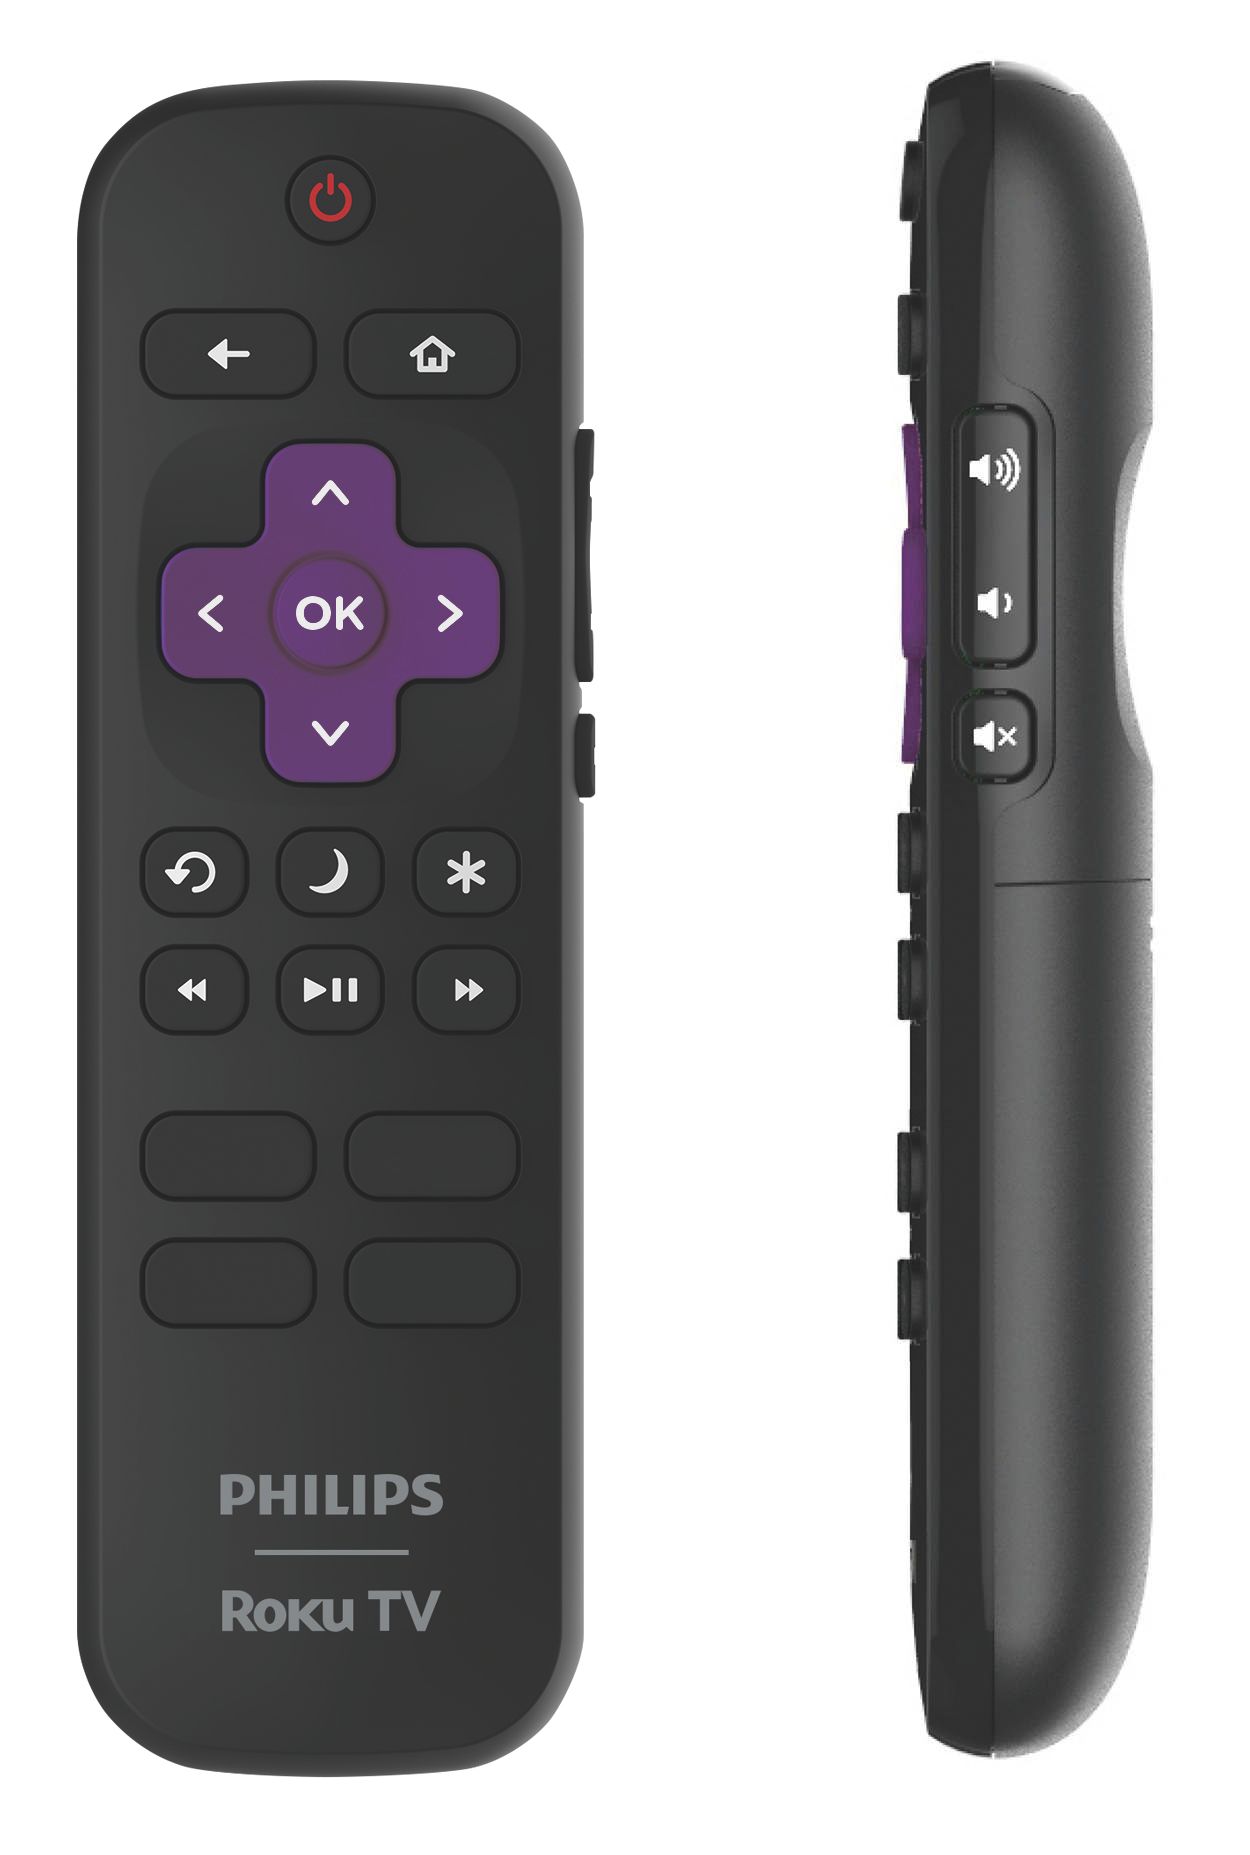 TV LED 43 - PHILIPS 43PUS8507/12, UHD 4K, Philips P5, DVB-T2 (H.265),  licenciado, Plata